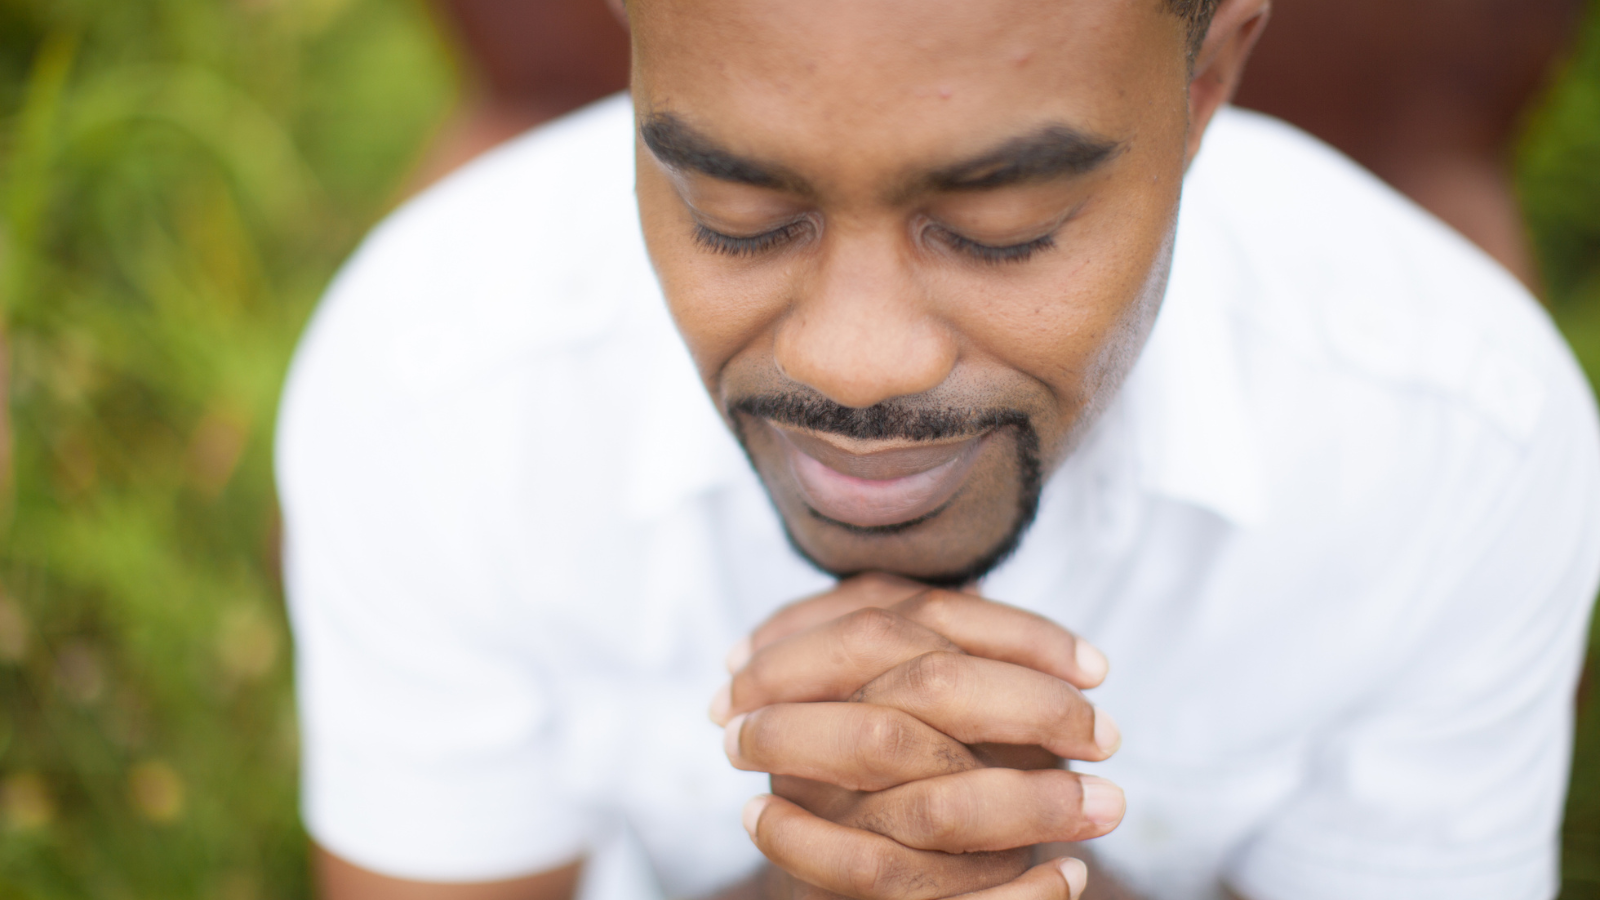 A man in a white shirt praying.